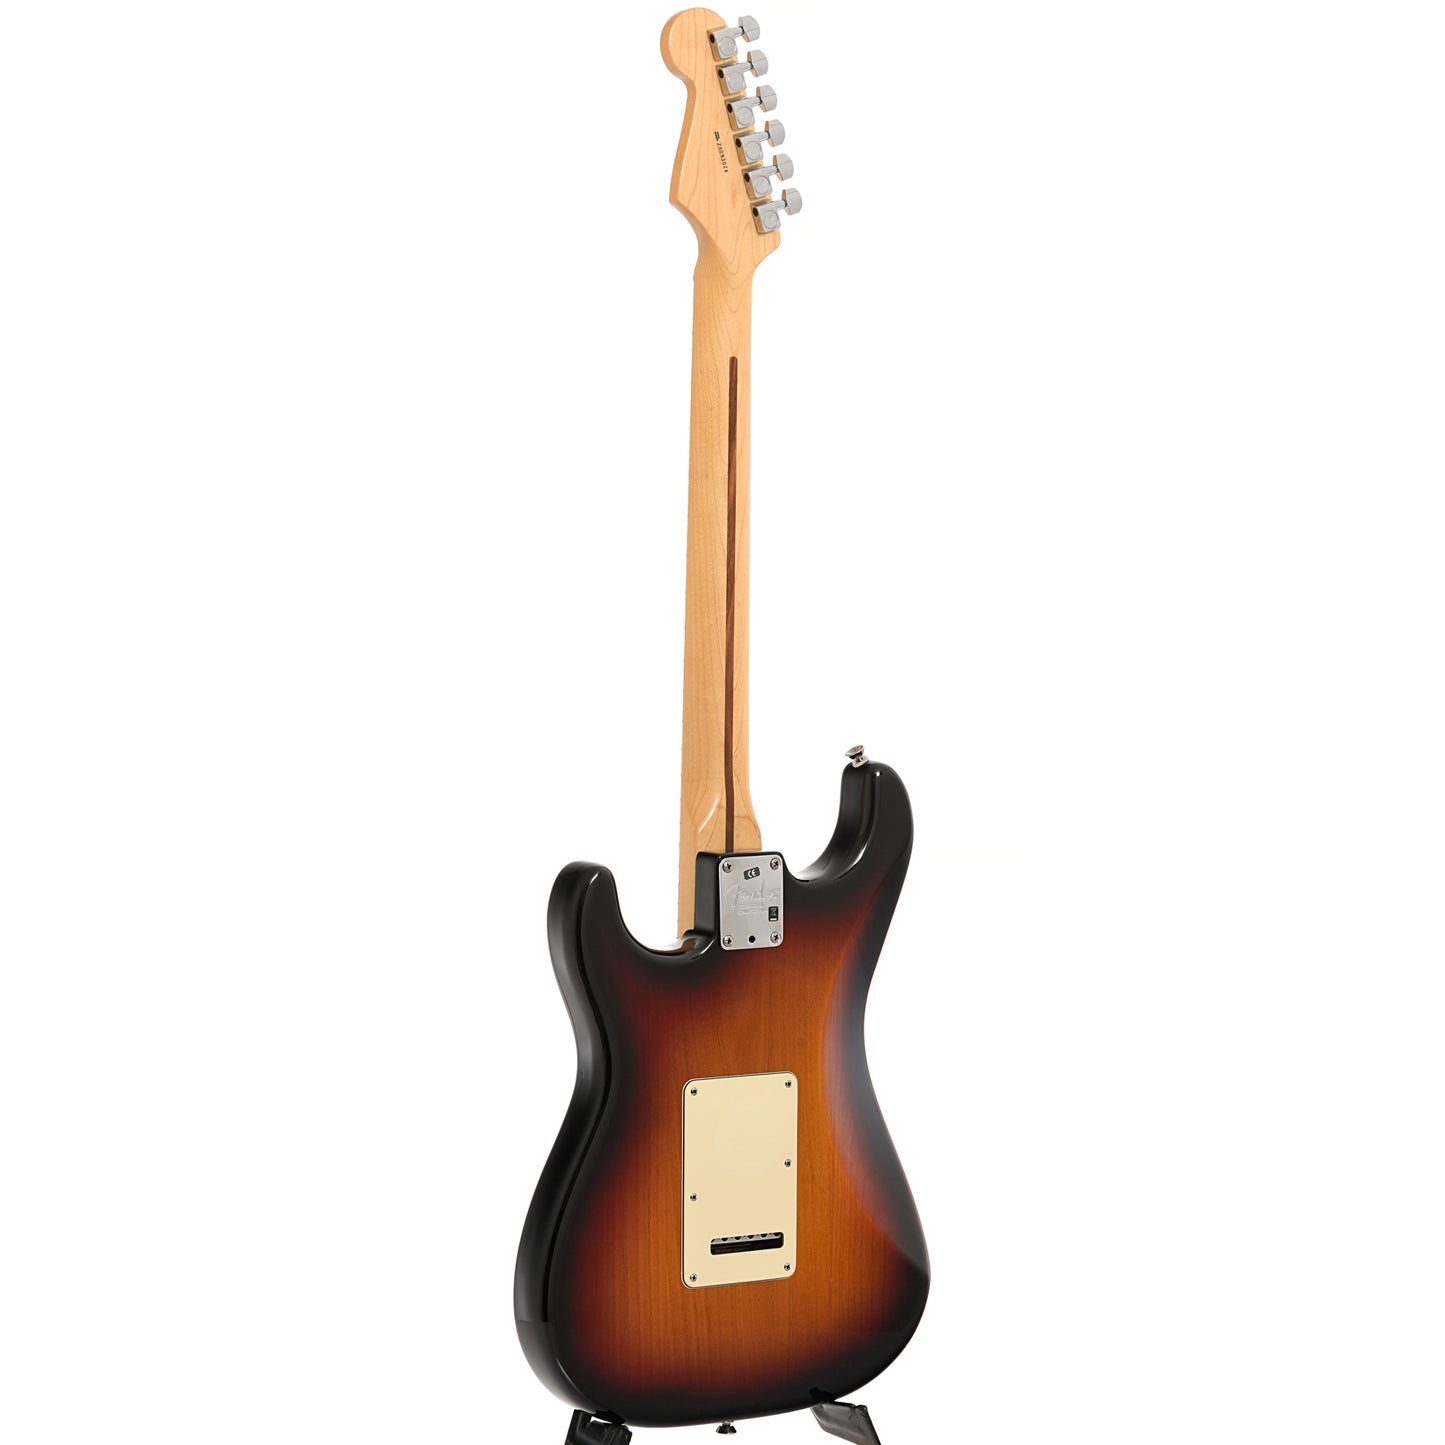 Full back and side of Fender New American Standard Stratocaster